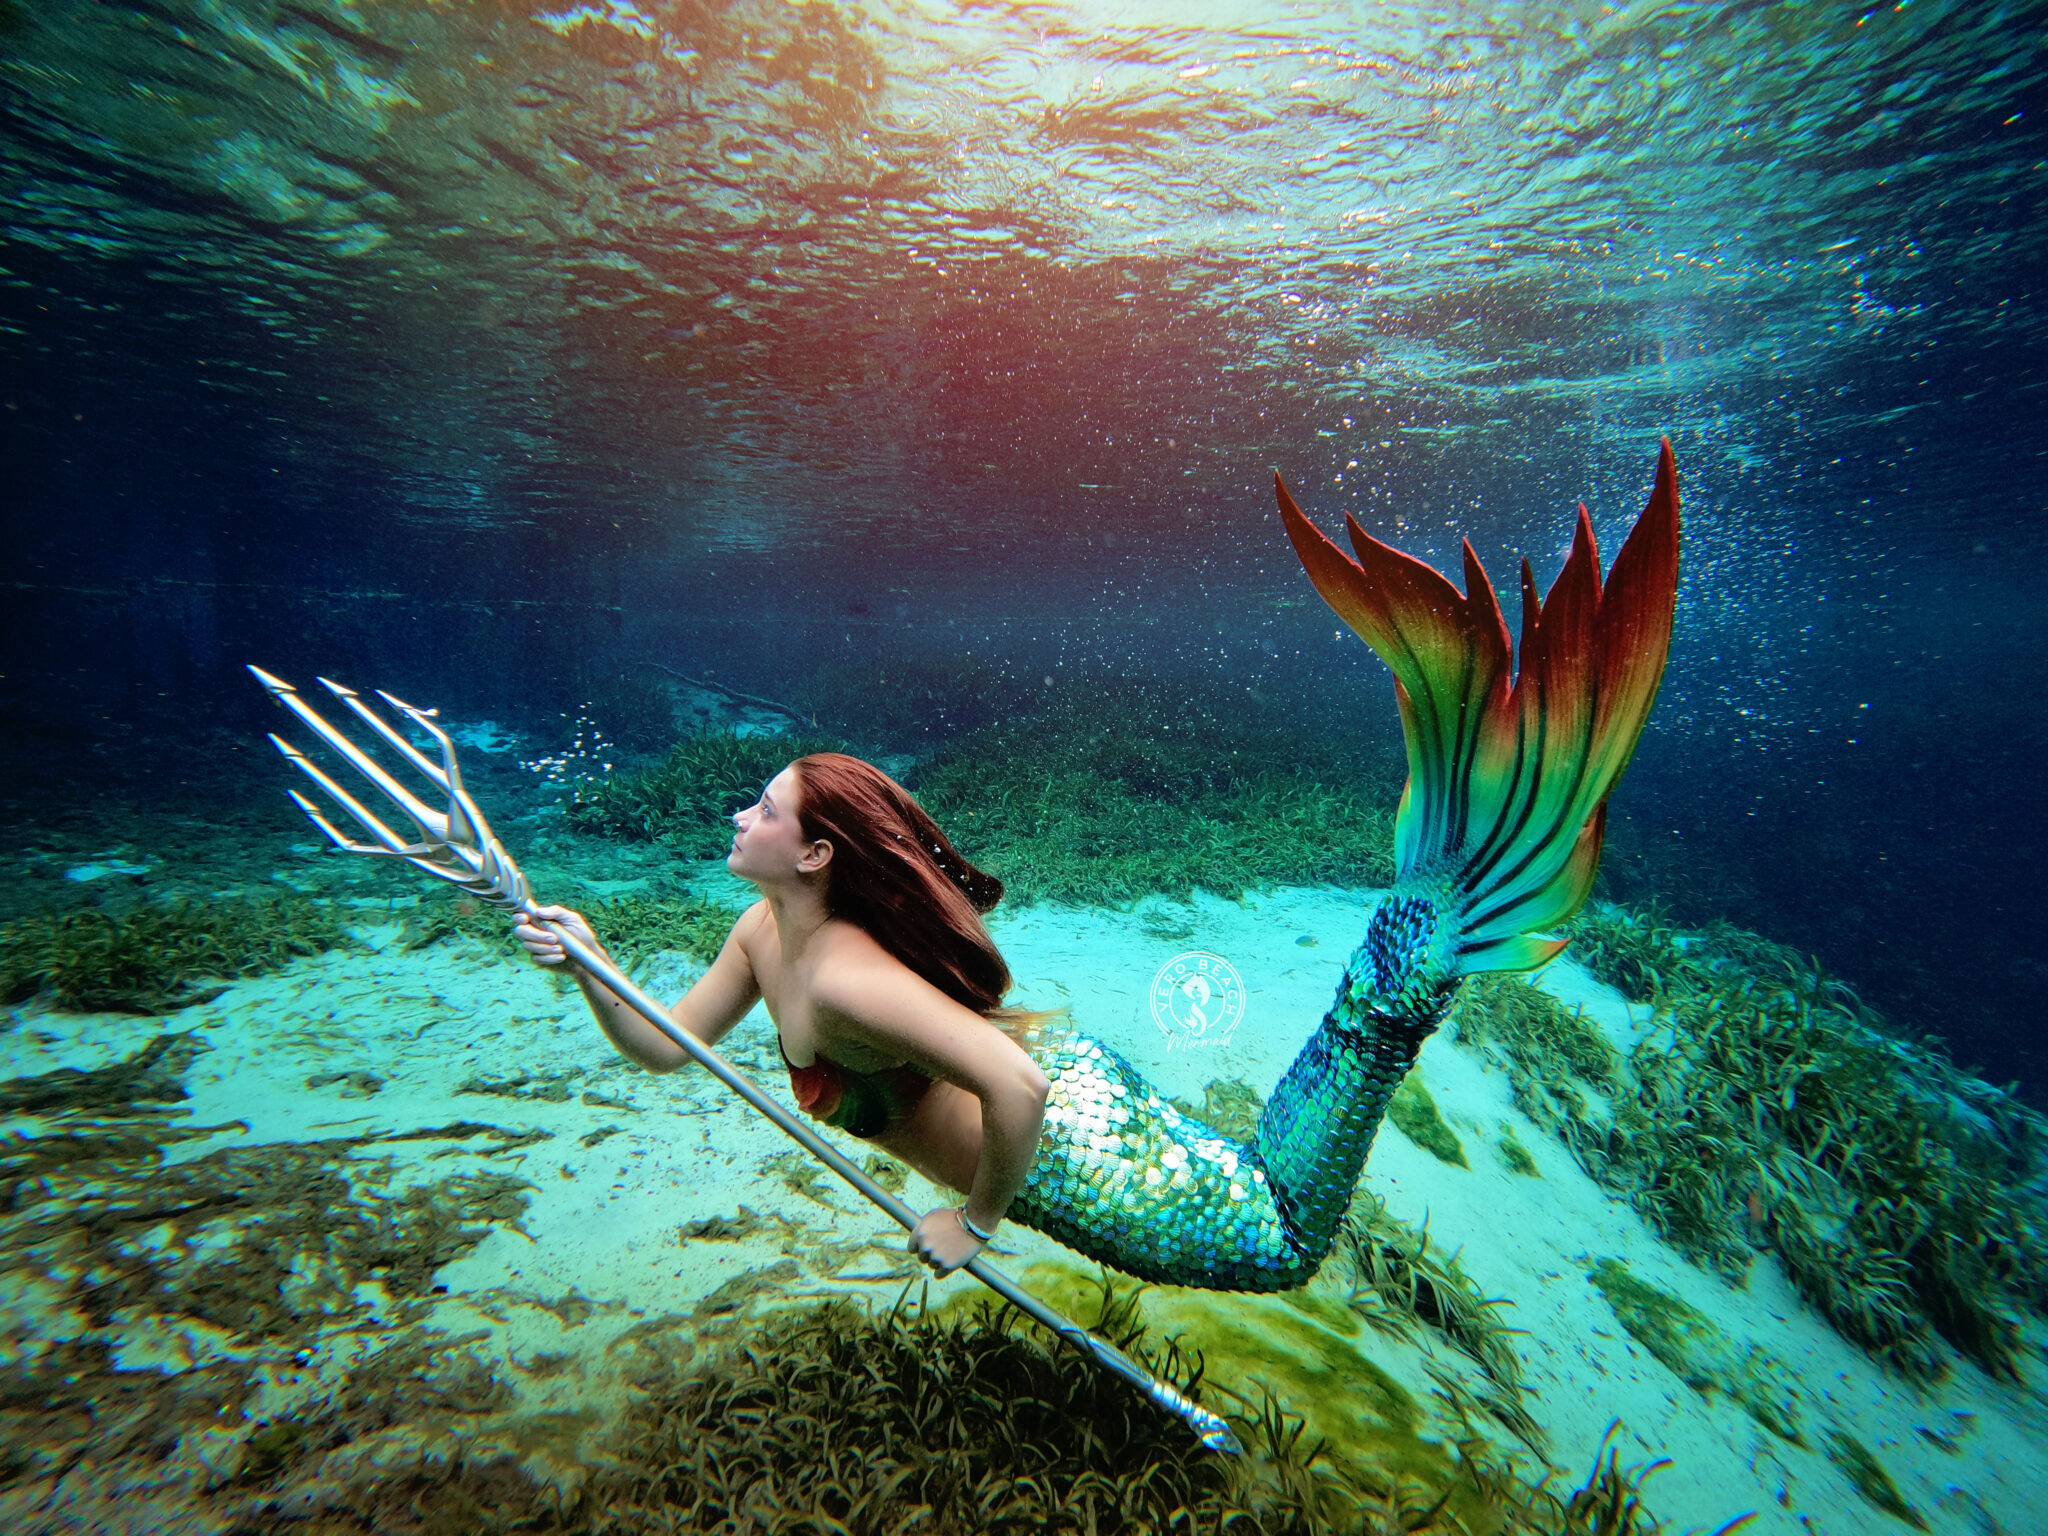 inspiring mermaid images